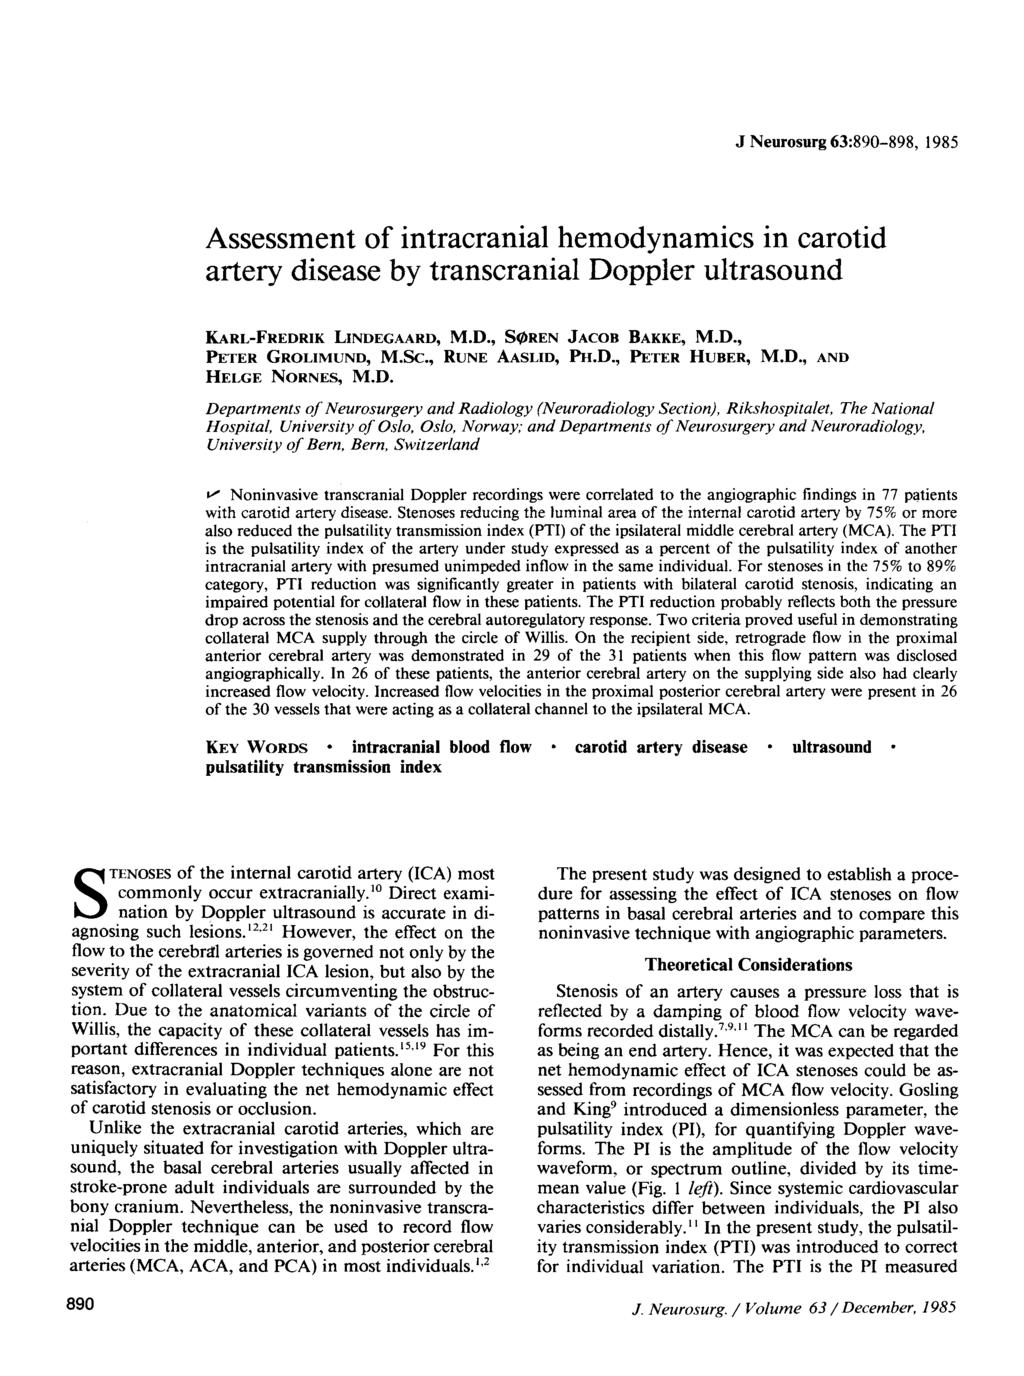 J Neurosurg 63:890-898,1985 Assessment of intracranial hemodynamics in carotid artery disease by transcranial Doppler ultrasound KARL-FREDRIK LINDEGAARD, M.D., S~REN JACOB BAKKE, M.D., PETER GROLIMUND, M.